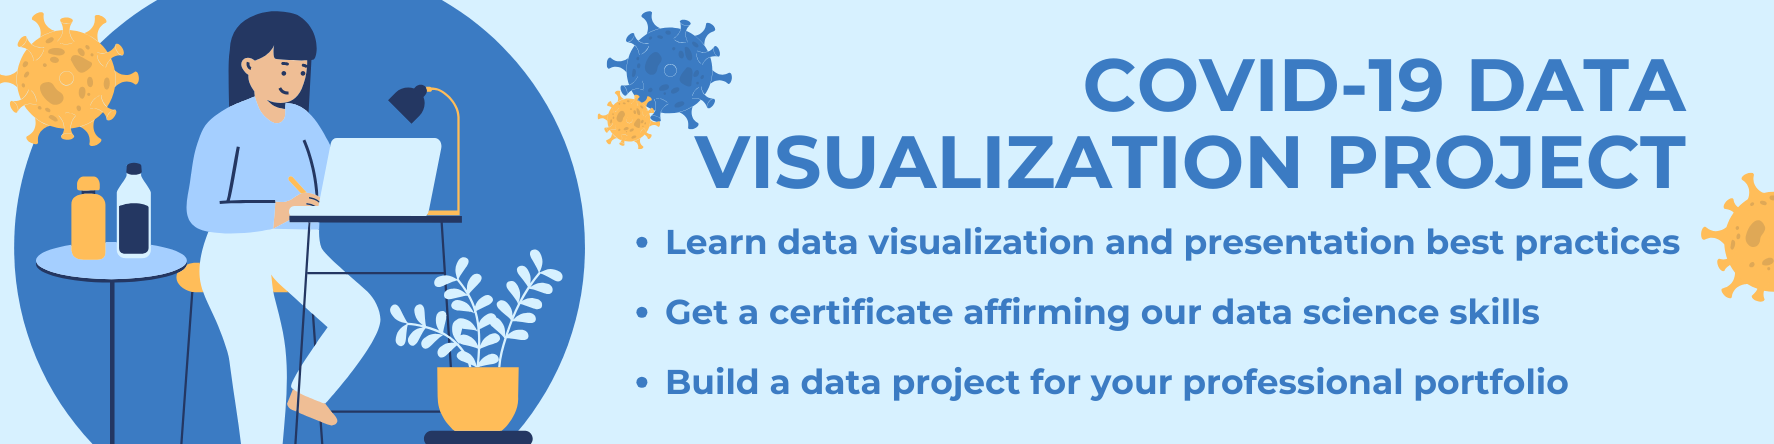 COVID-19 Data Visualization Project advert